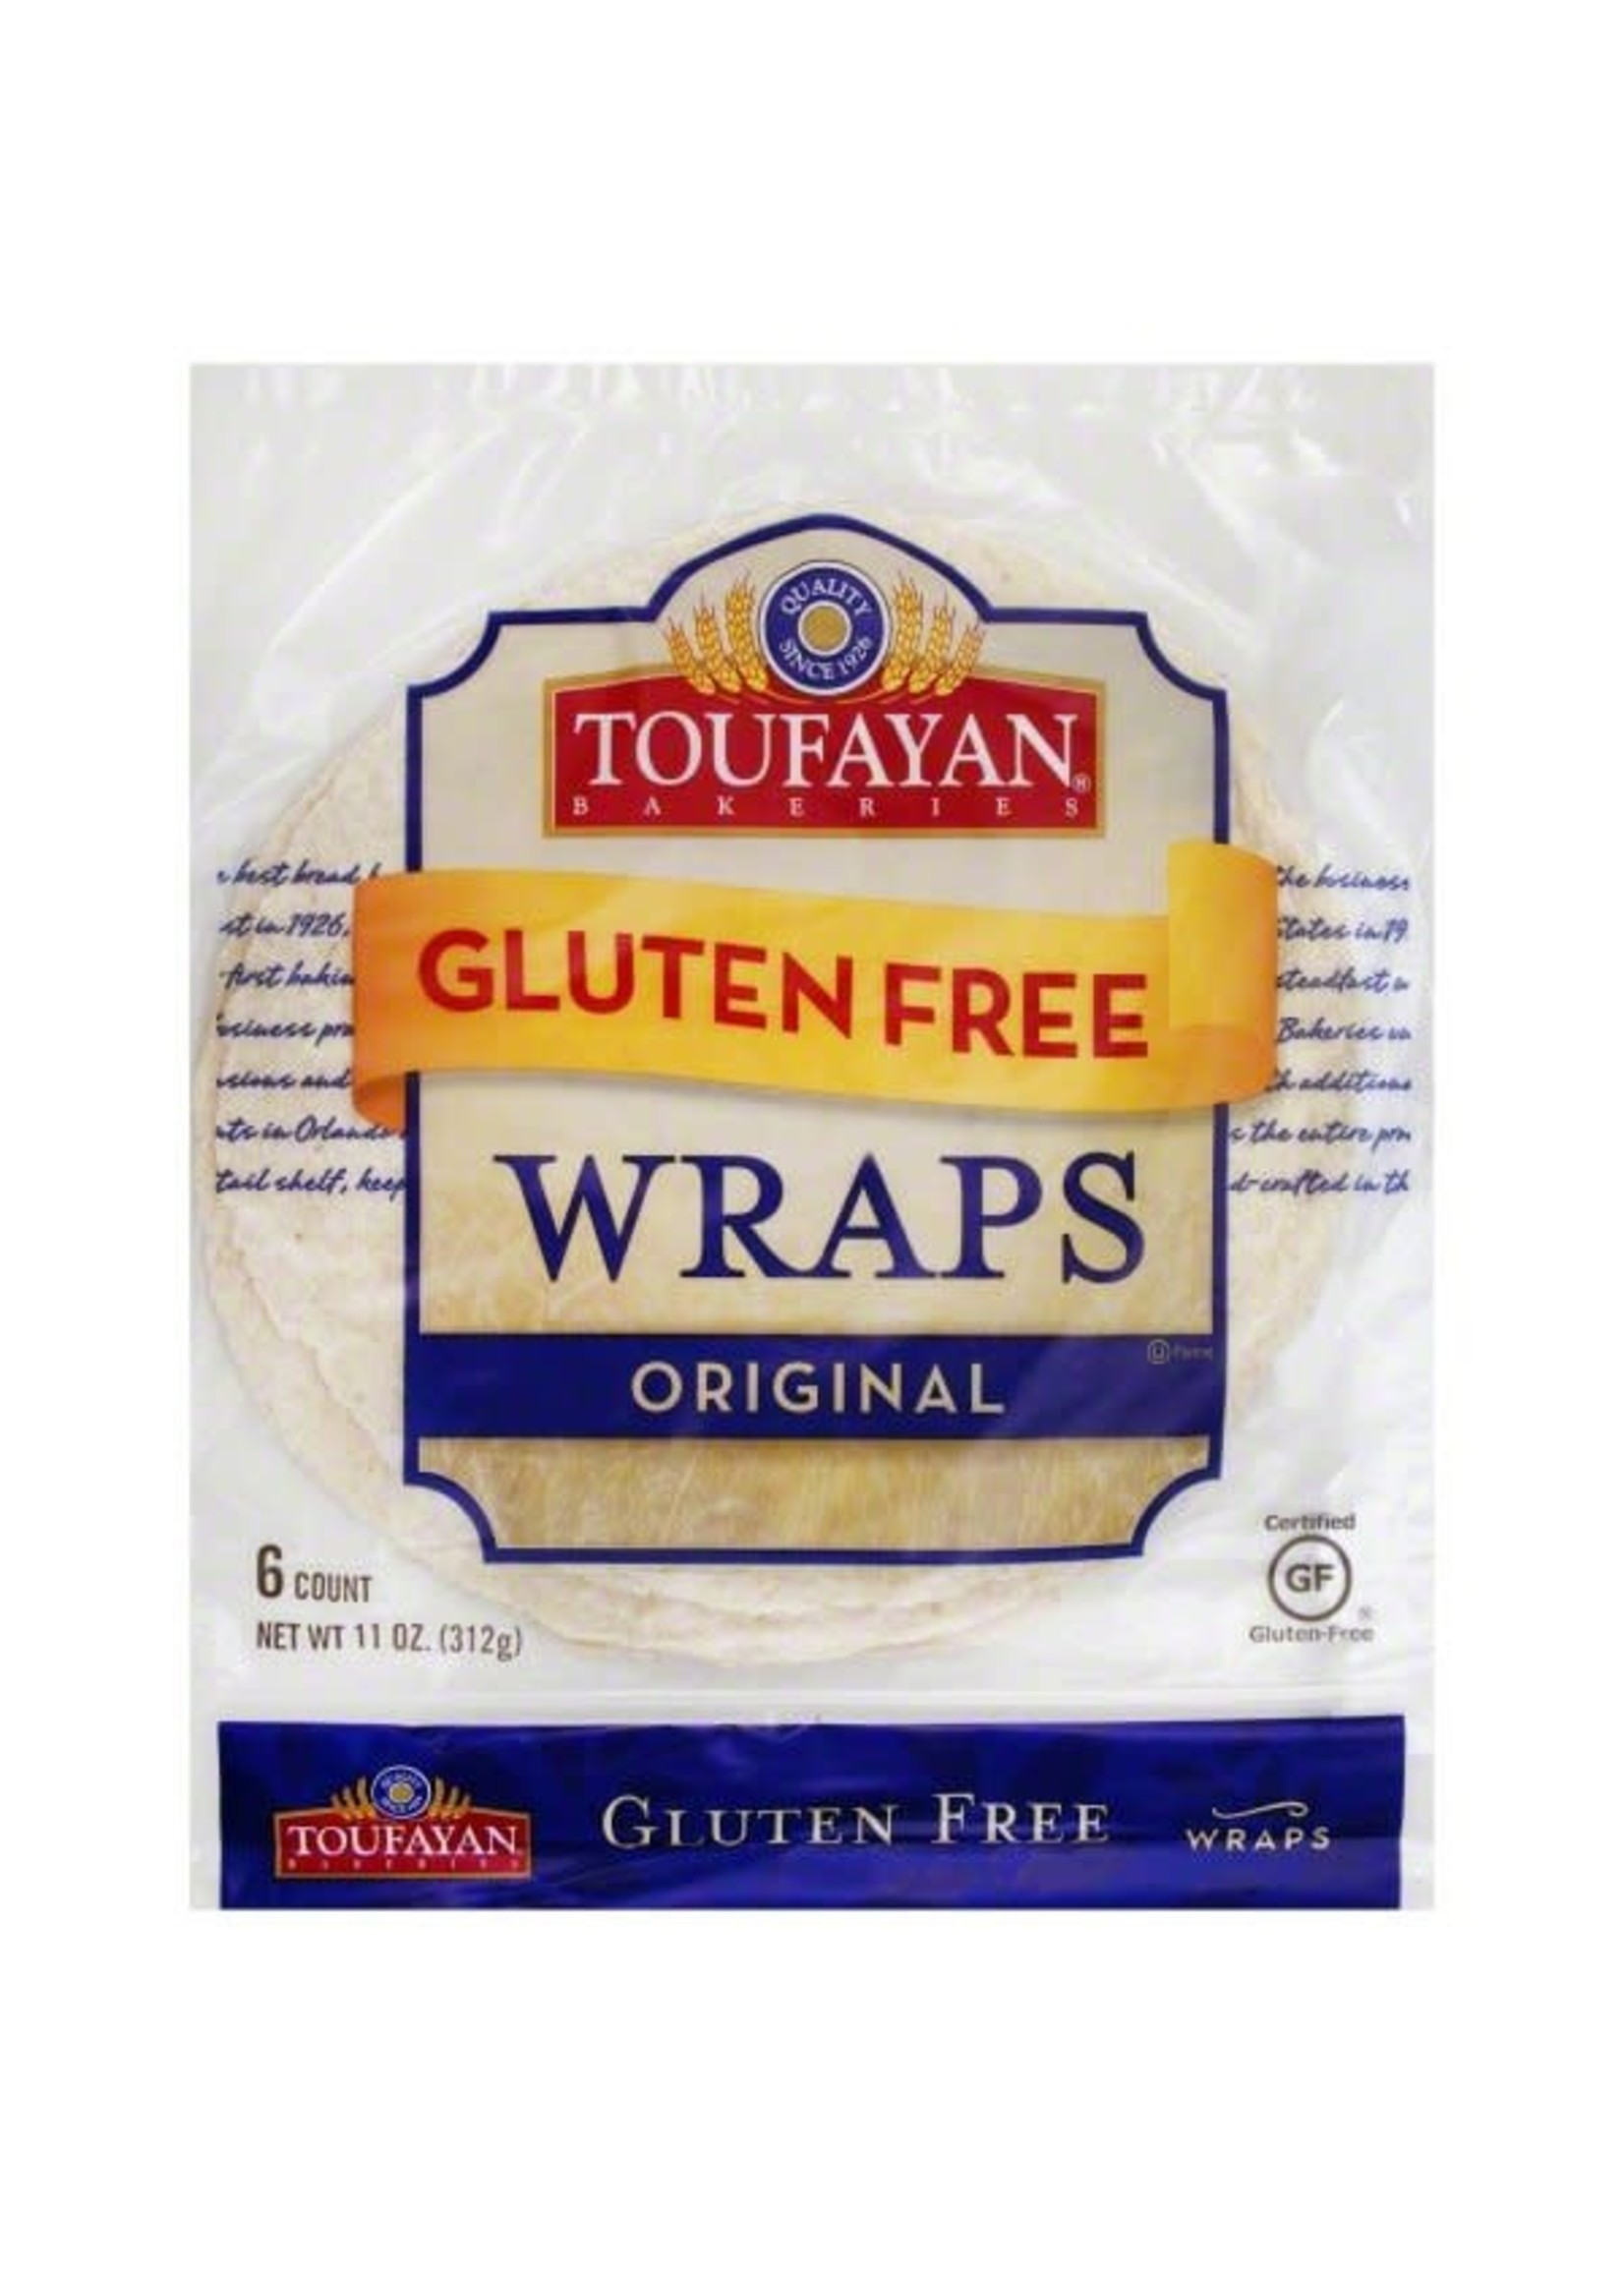 Toufayan Gluten Free Wraps Original